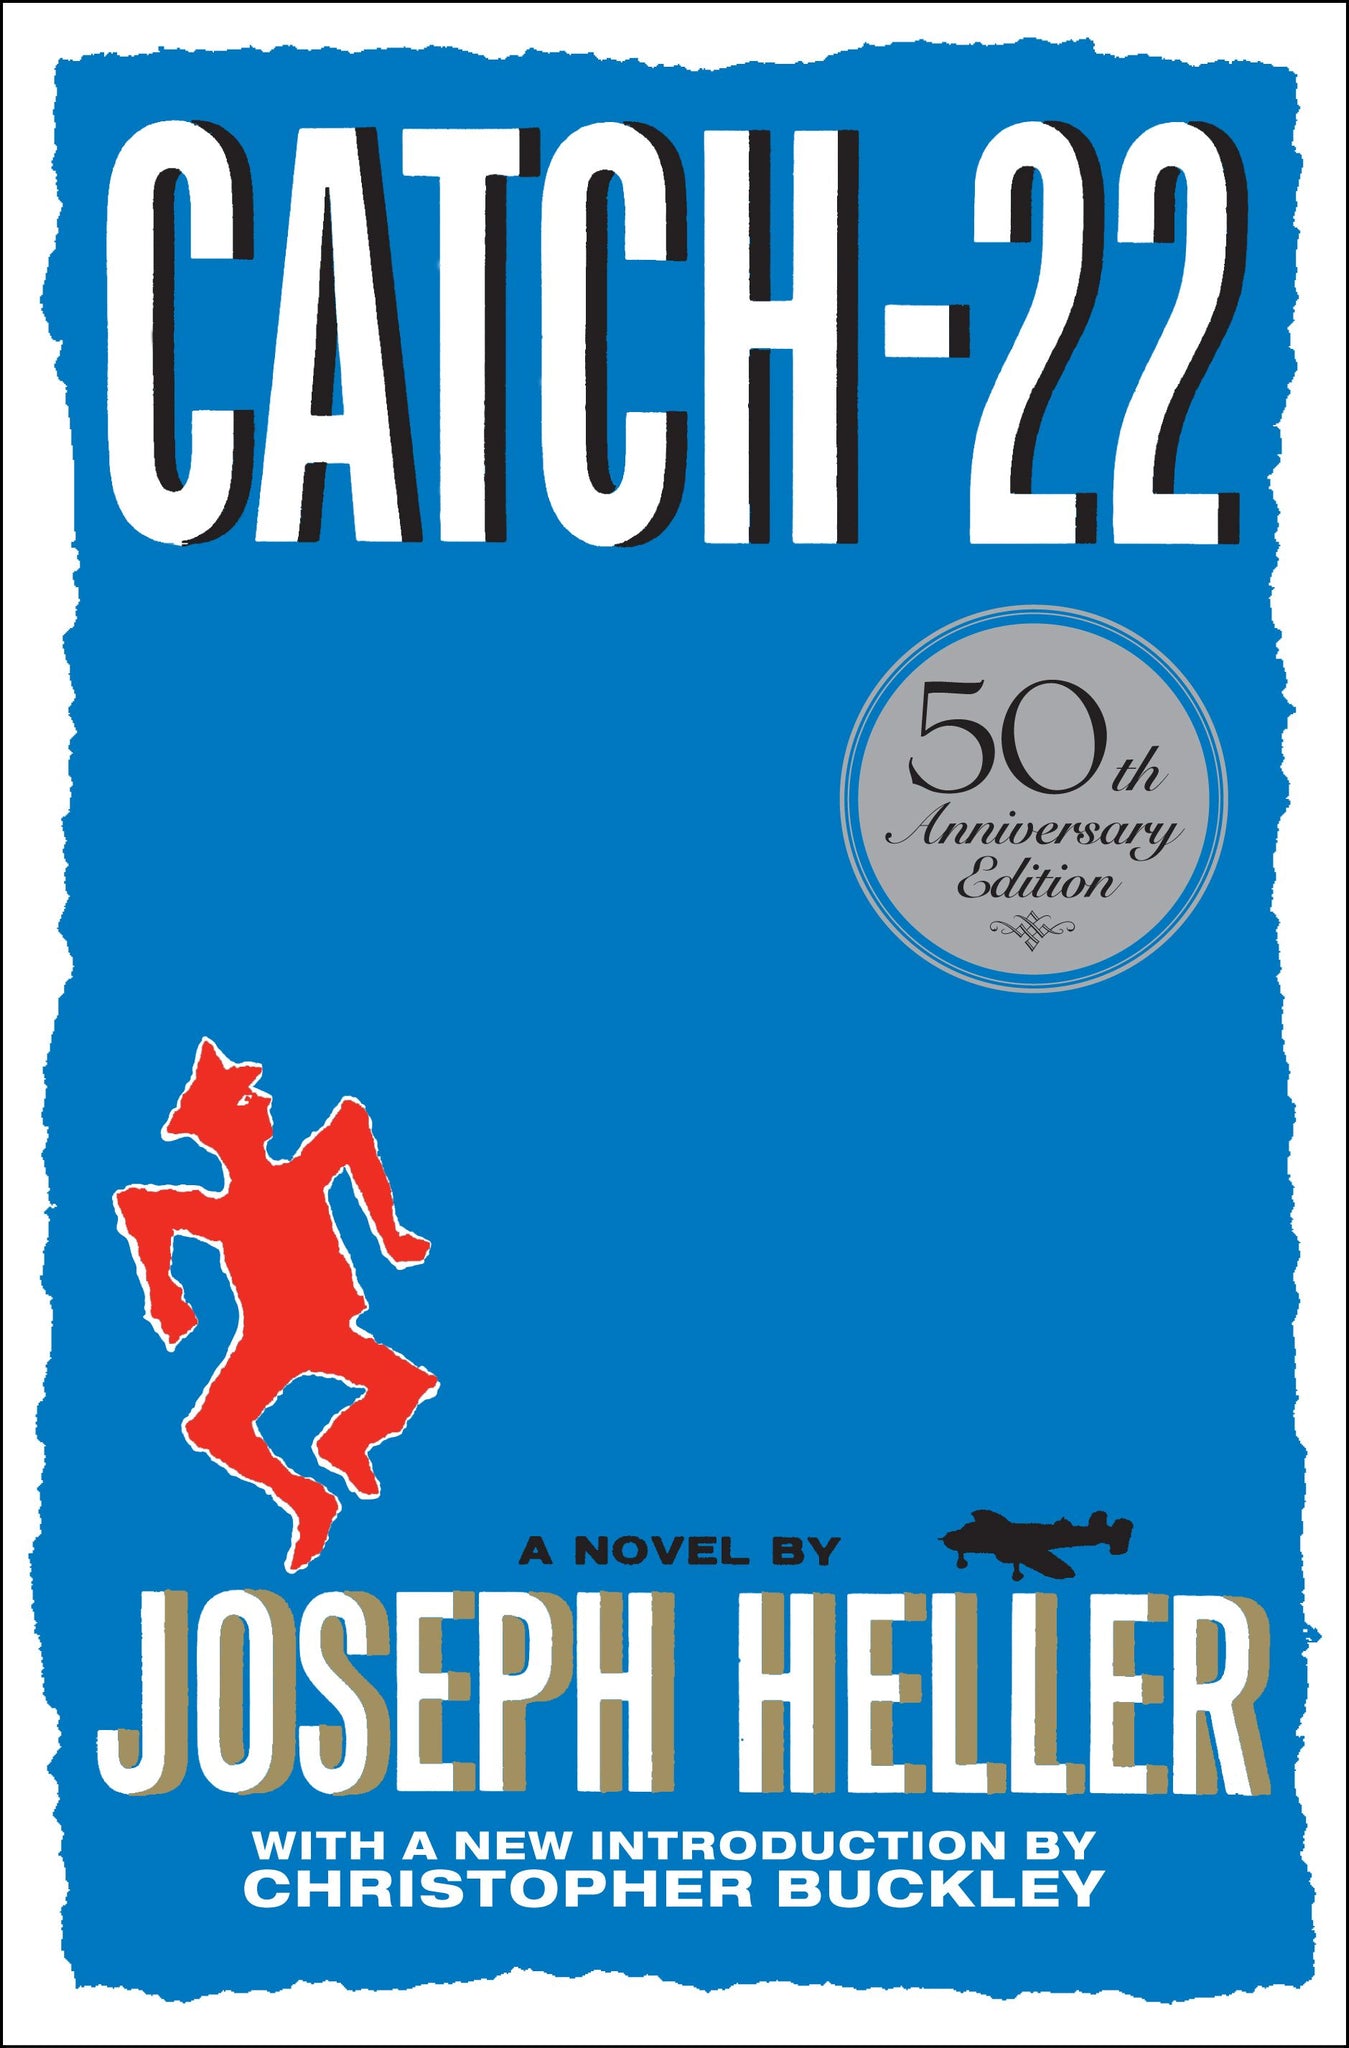 Catch-22 : 50th Anniversary Edition